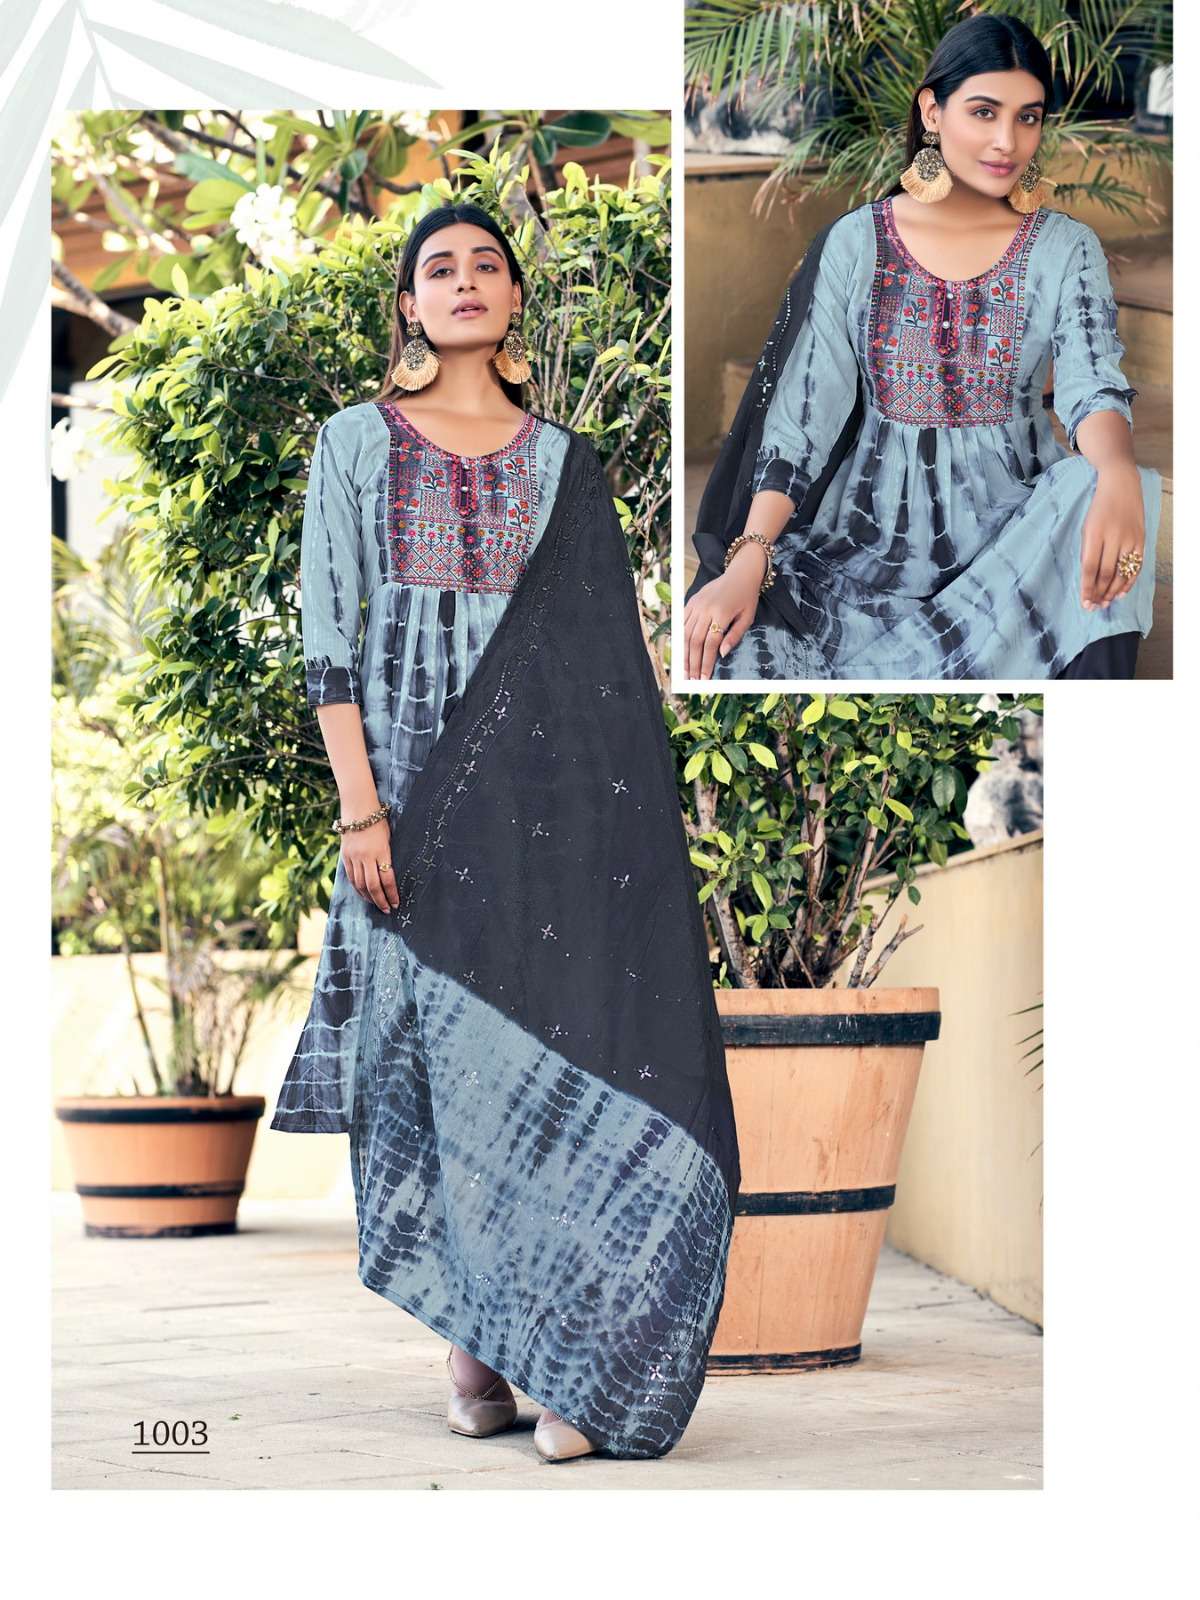 colourpix noor 1001-1006 series latest designer nayra cut kurti set wholesaler surat gujarat